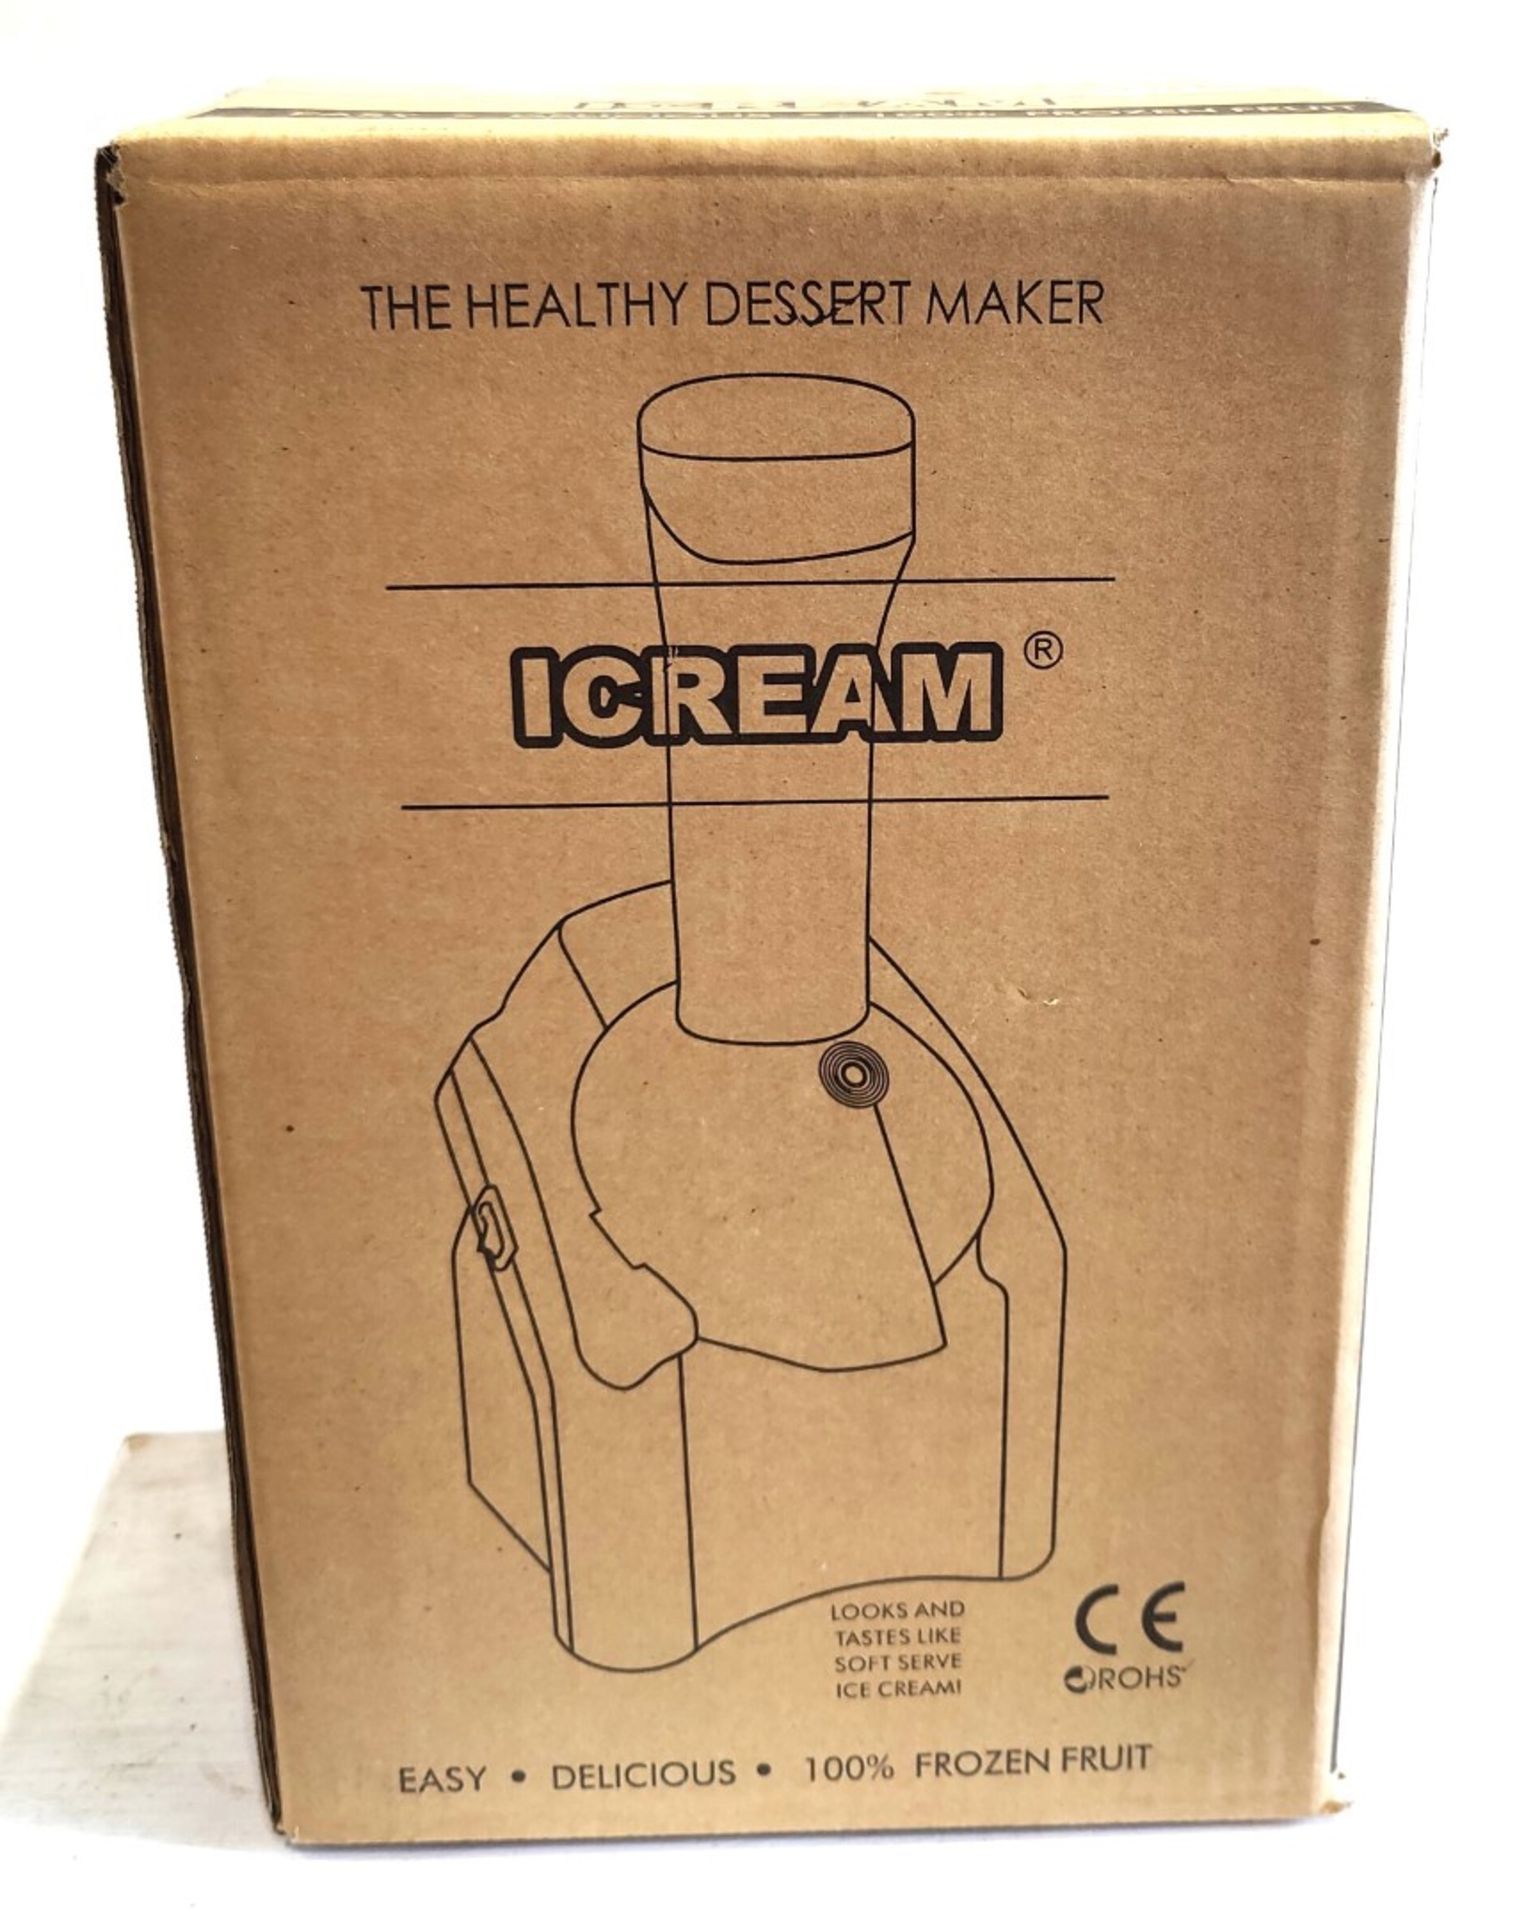 1 x Icream Healthy Desert Maker - Yogurt and Soft Ice Cream Home Appliance - 240v - Brand New - Image 8 of 12